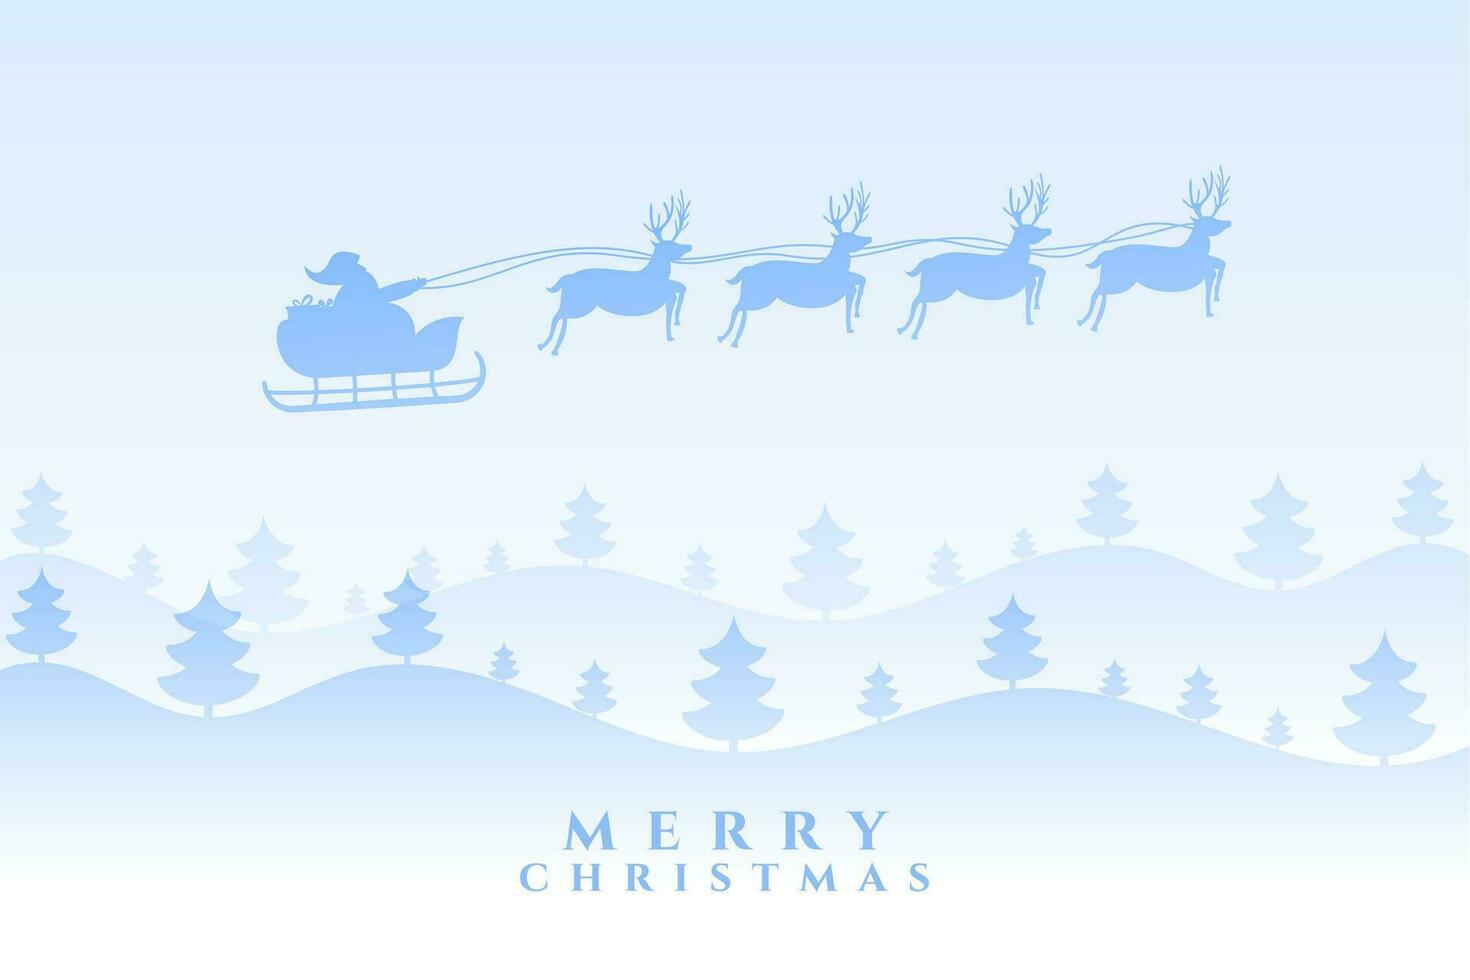 merry christmas festive tree background with flying santa sleigh vector